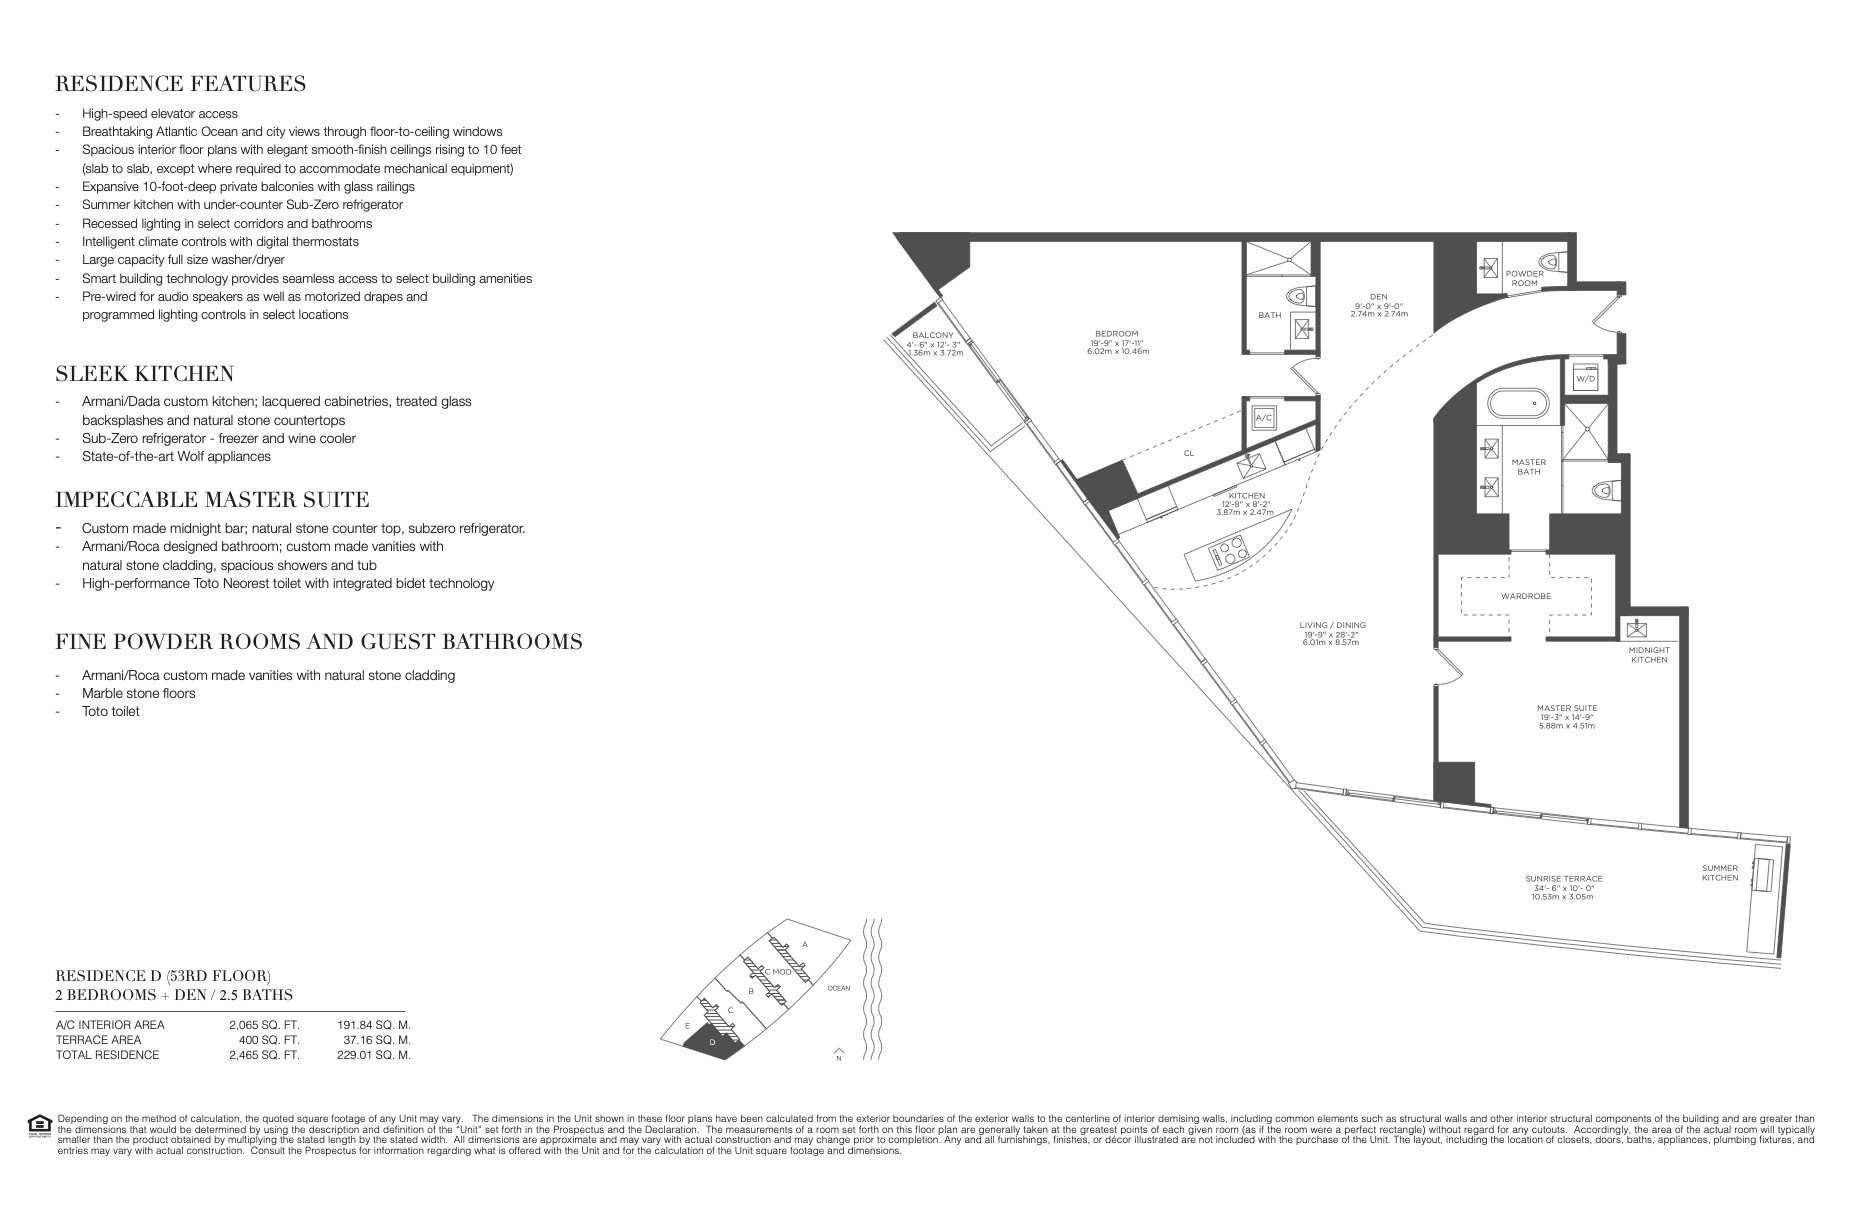 Floor Plan for Residences by Armani Casa Floorplans, Residence D